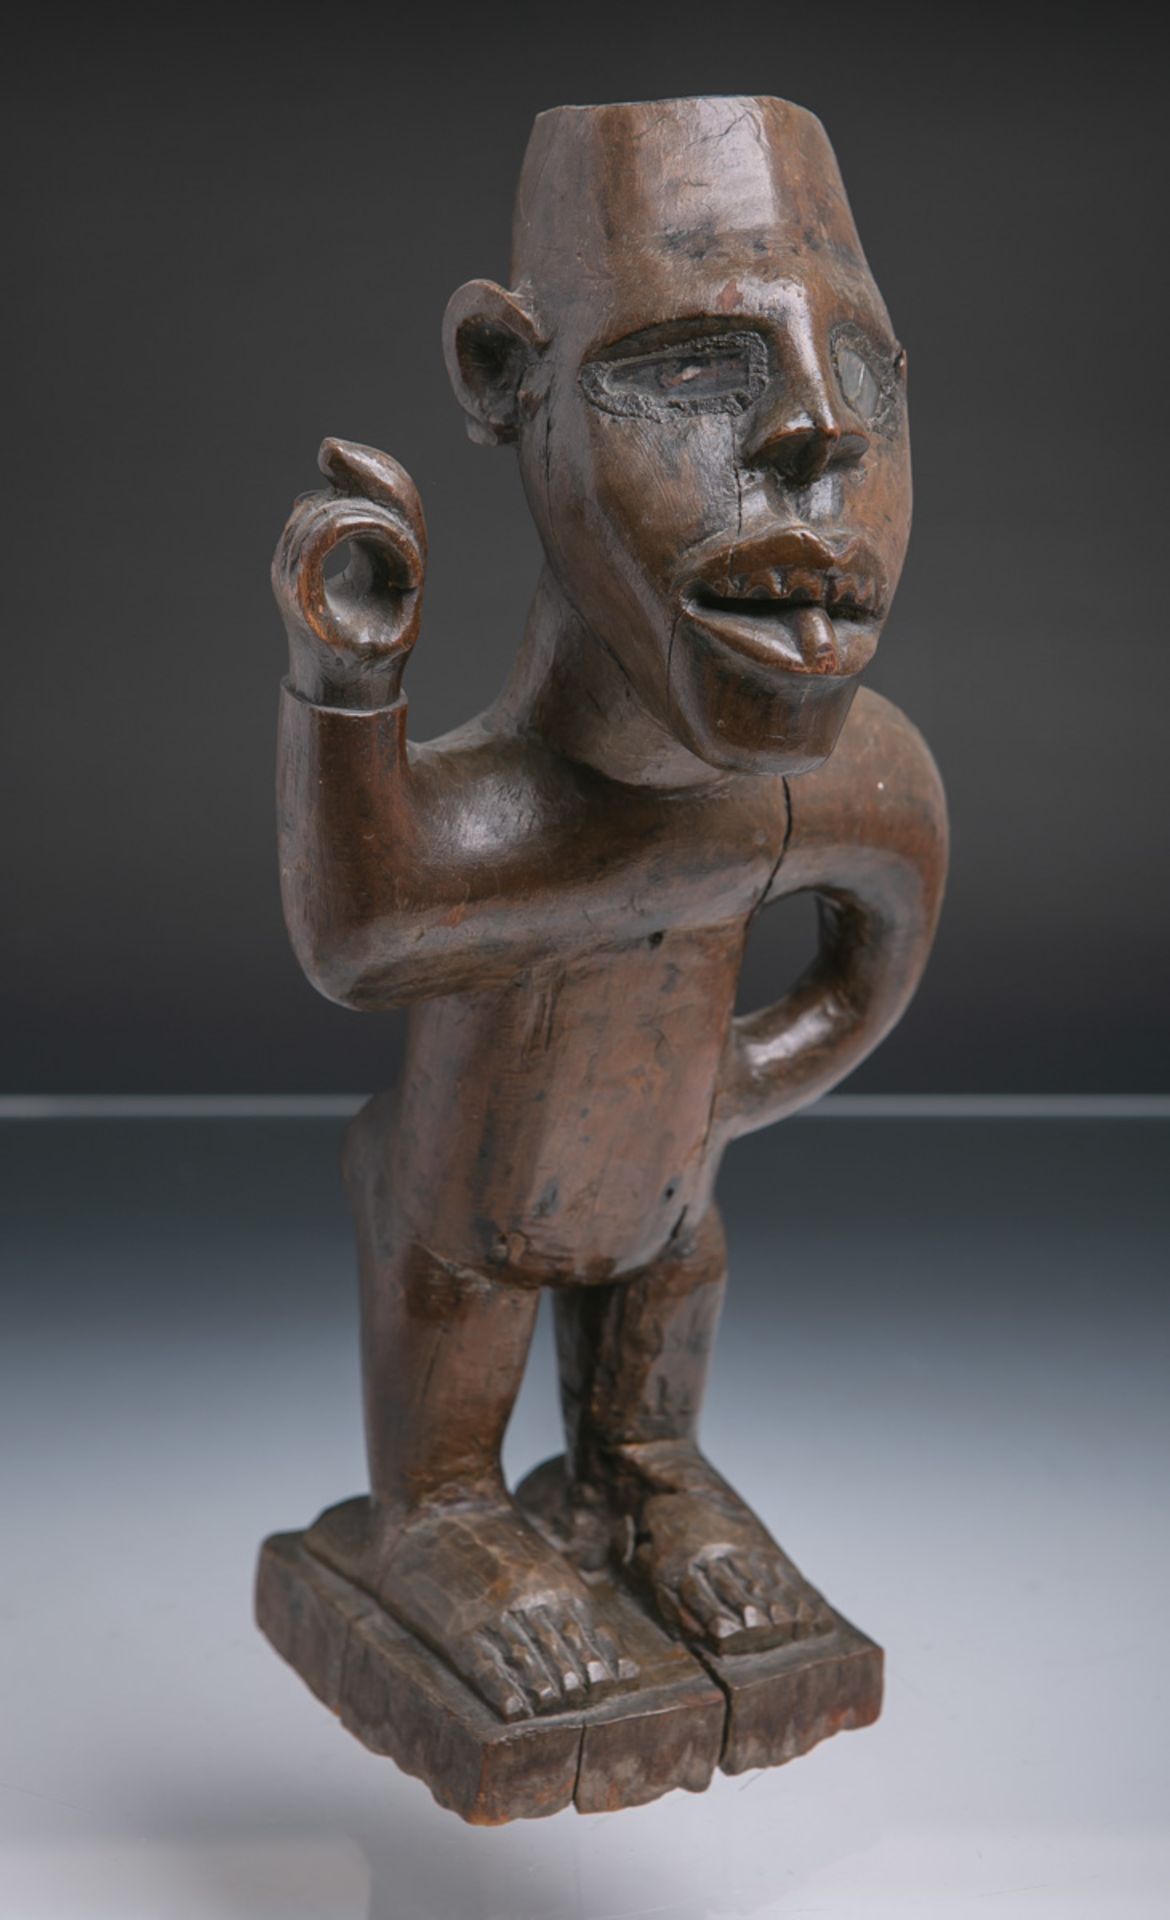 Holzfigur (Equatorial Guinea od. Kongo, wohl 19. Jh.)